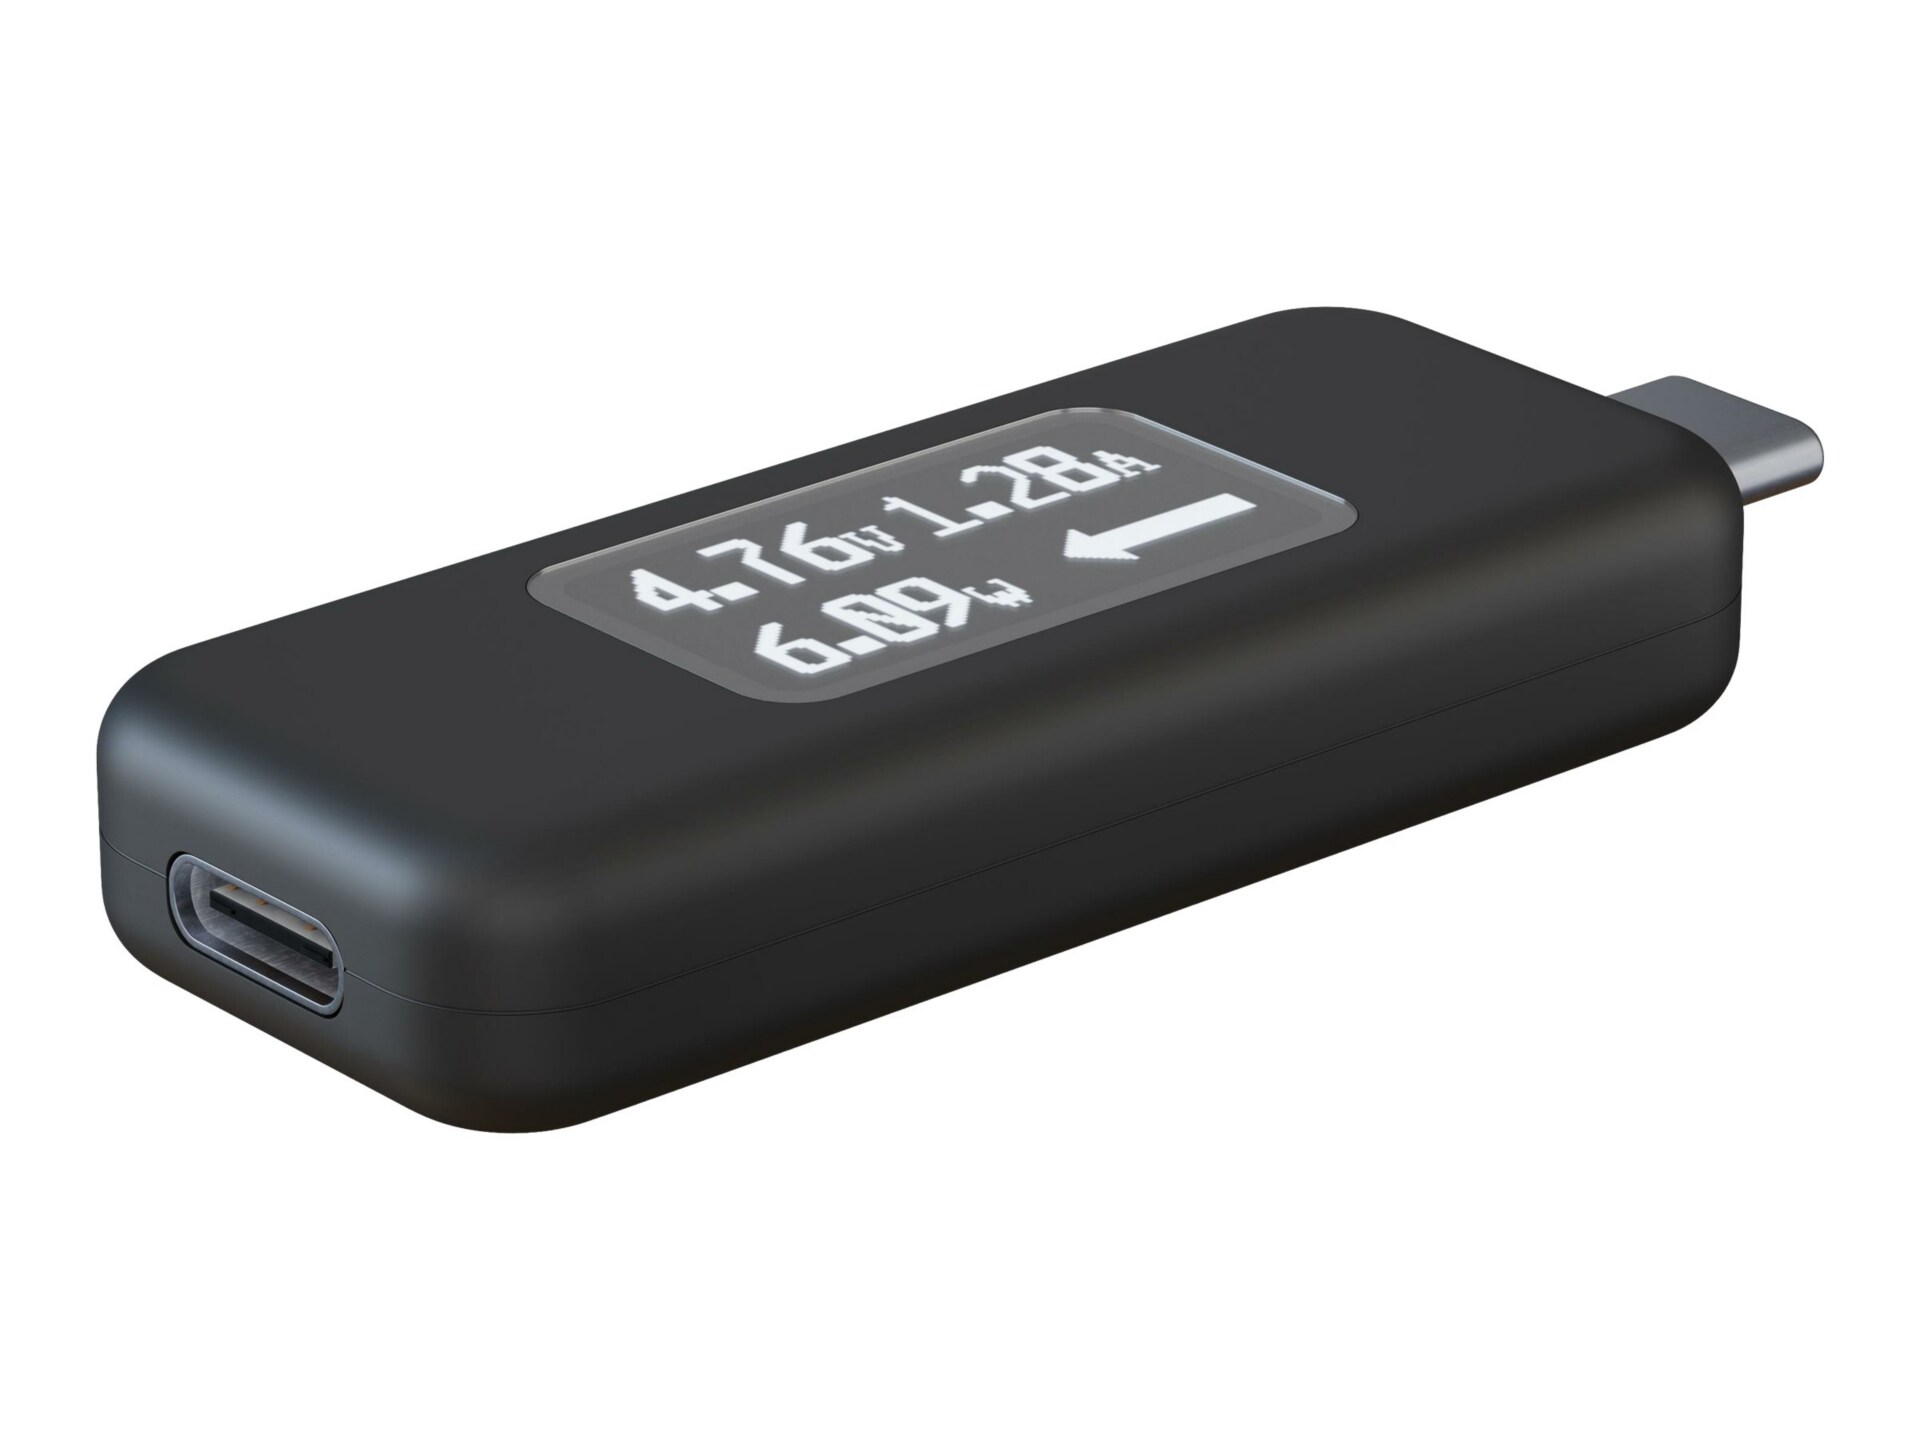 Plugable - USB voltage and current meter - USB-C